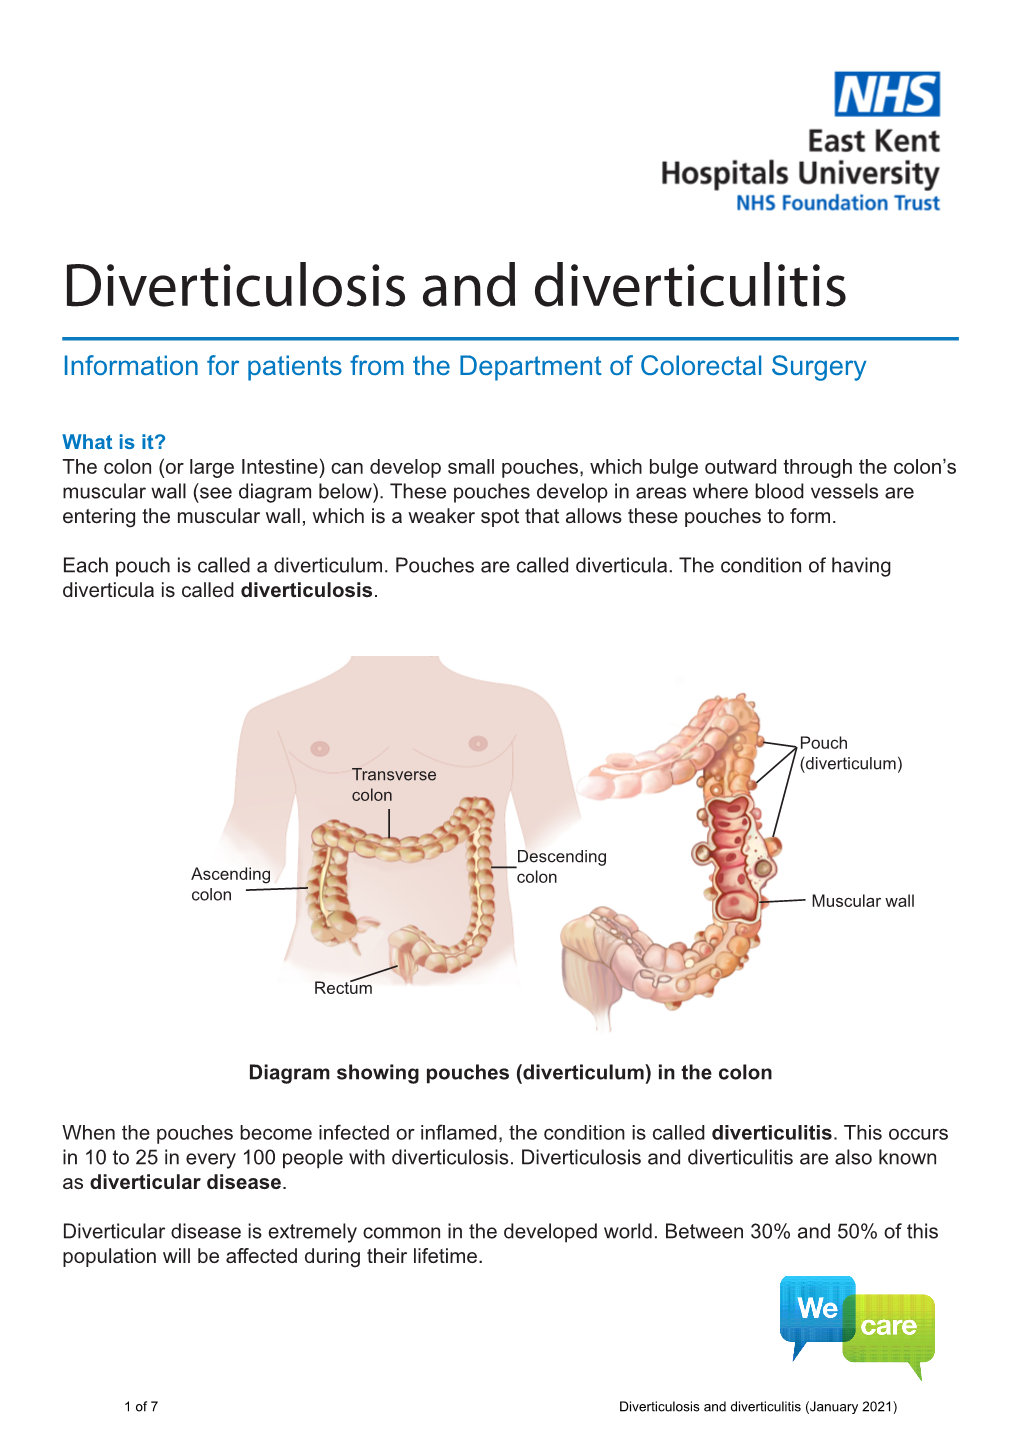 Diverticulitis and Diverticulosis